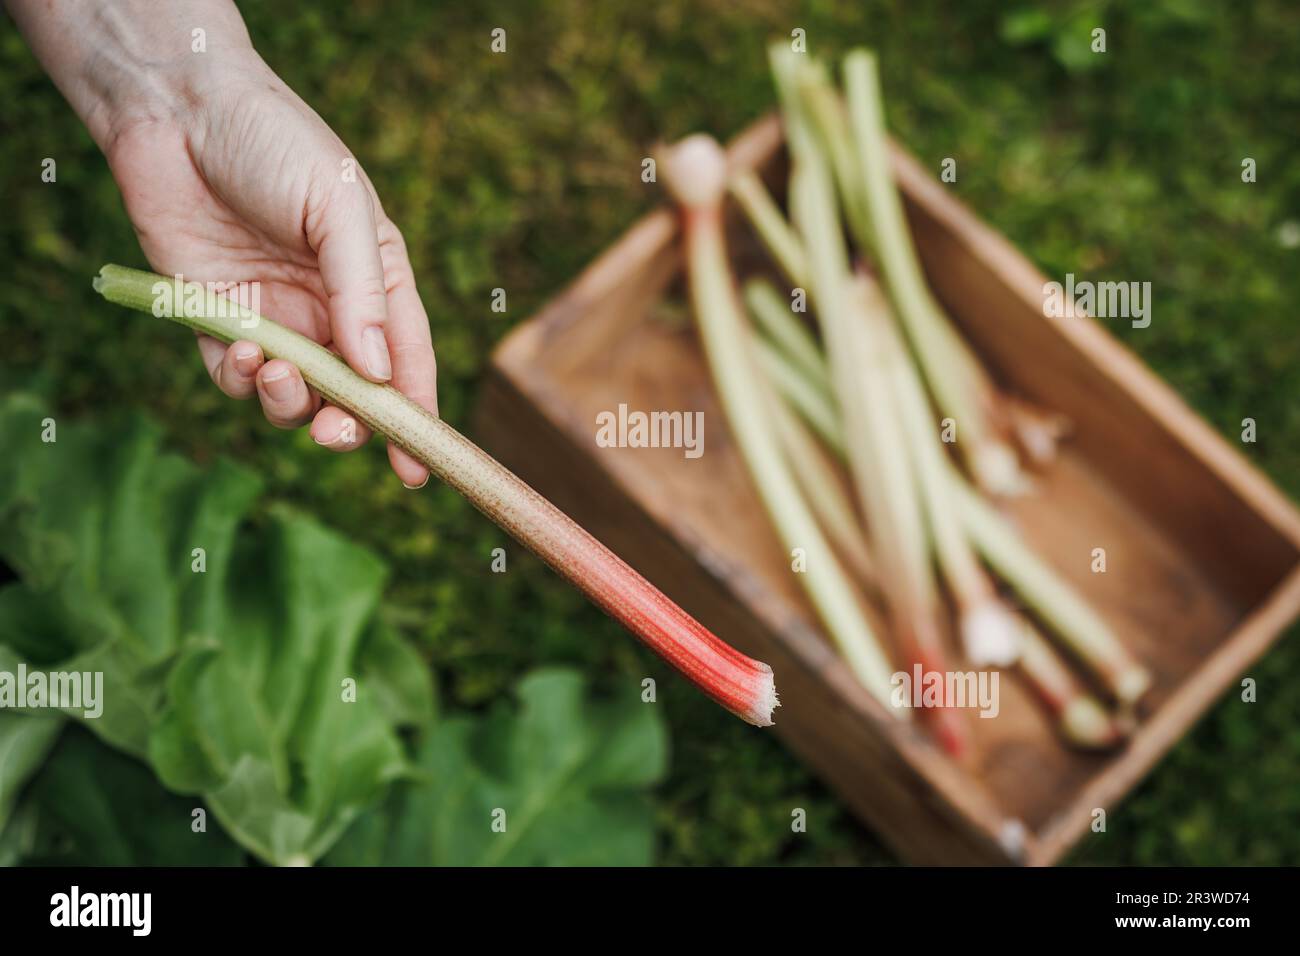 Rhubarb harvesting in organic garden. Farmers hand holding rhubarb stalk in her hand Stock Photo